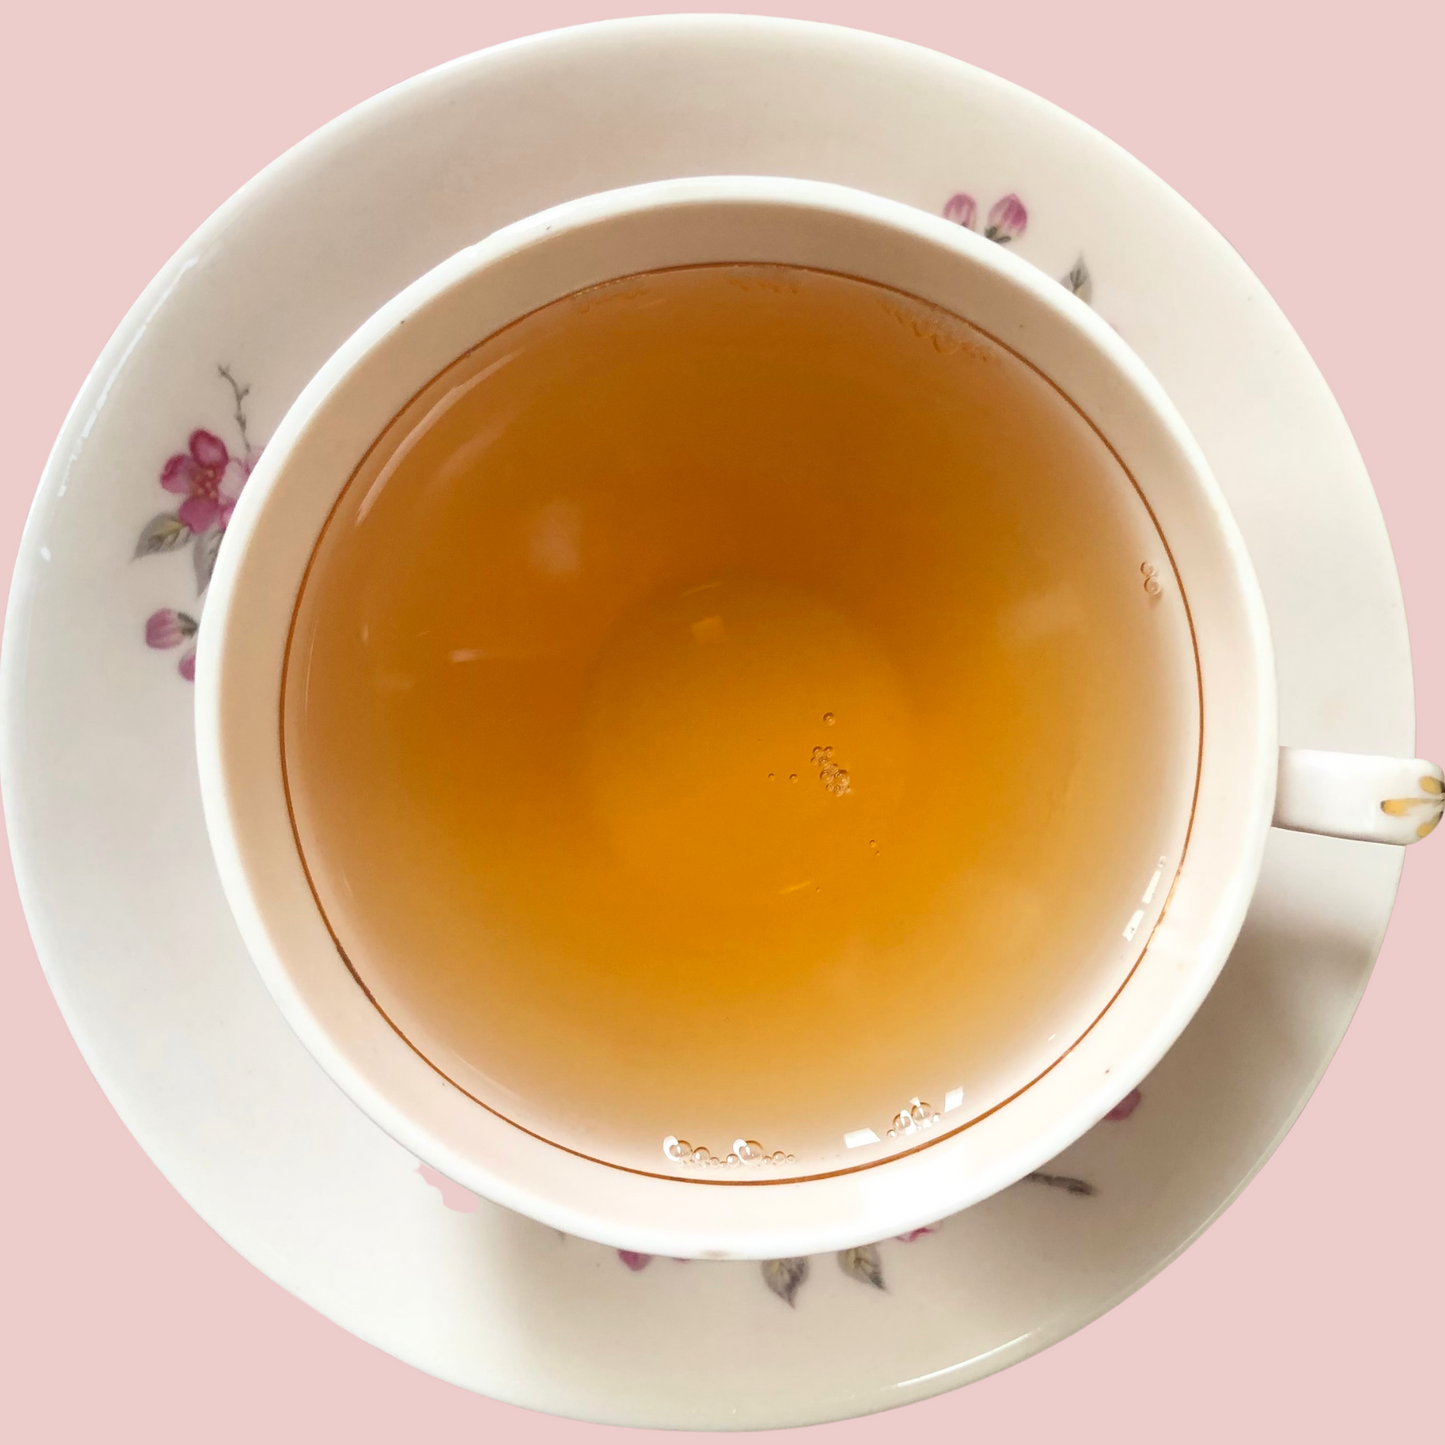 Buy Online: Oolong Tea, Ginseng Tea : Chai Experience